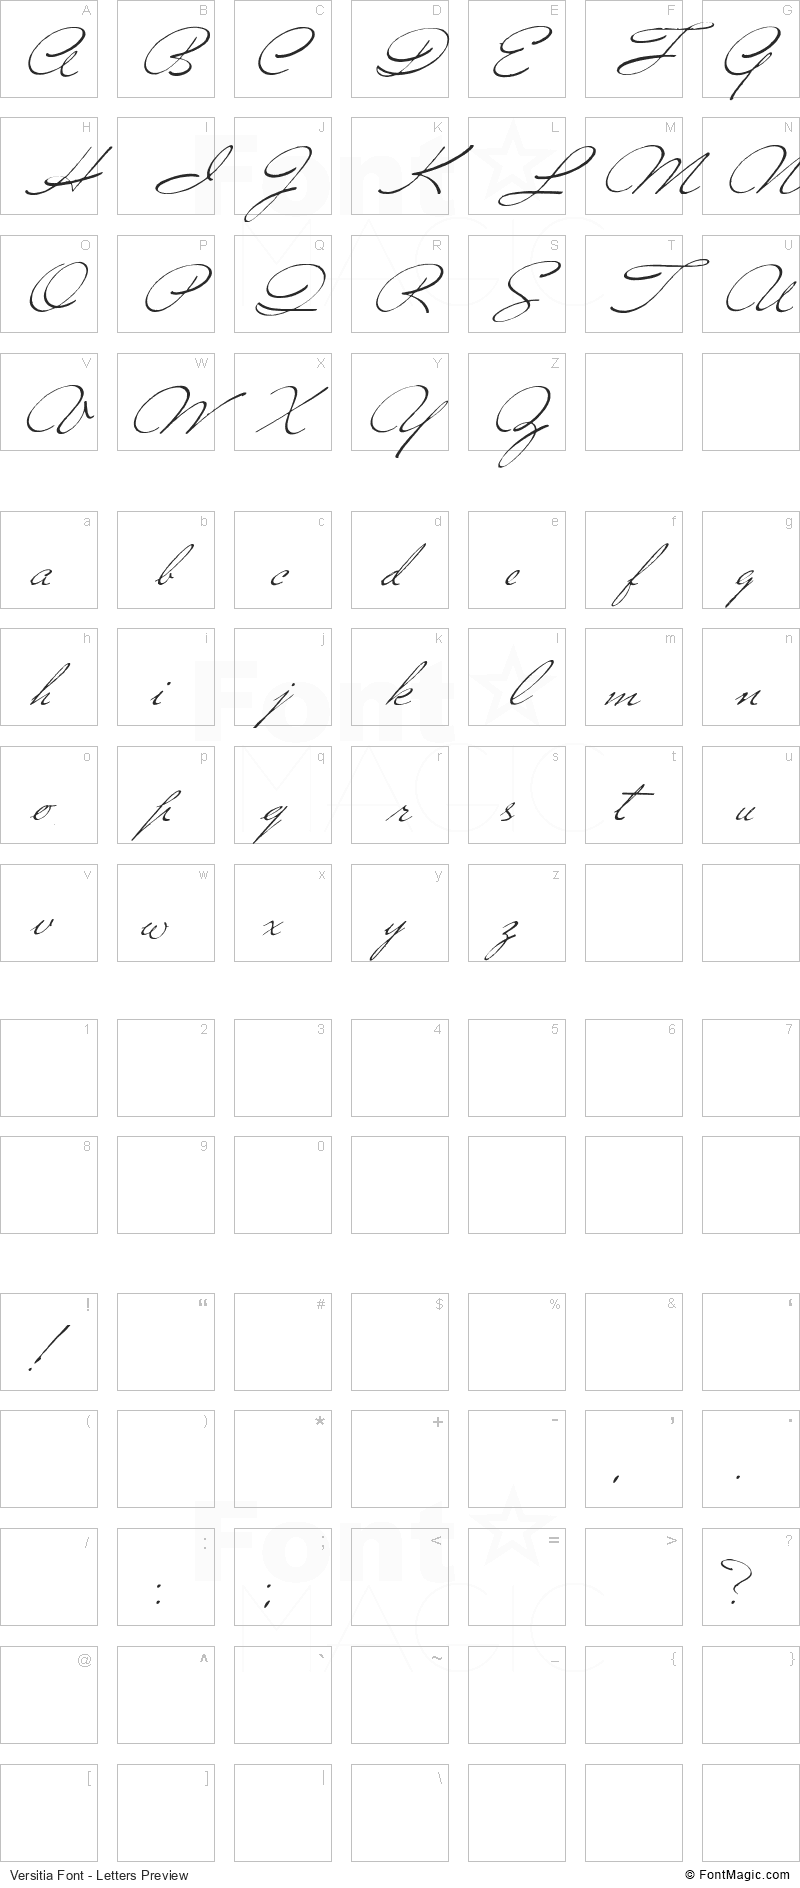 Versitia Font - All Latters Preview Chart